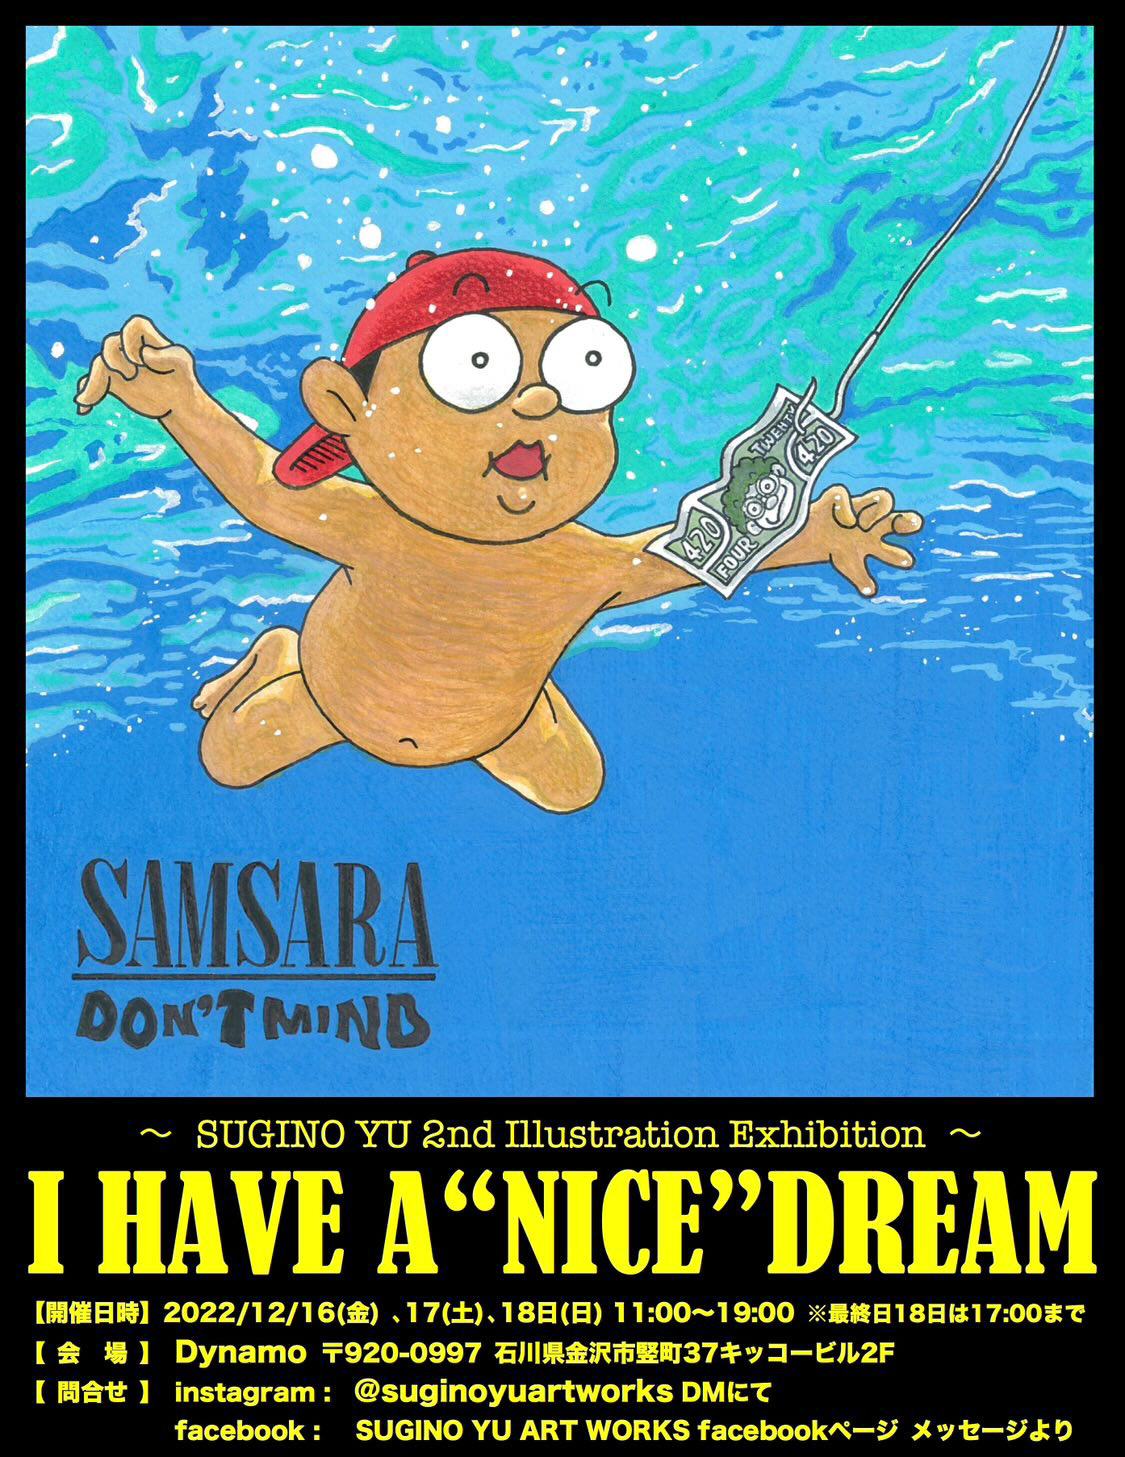 〜 SUGINO YU 2nd Illustration Exhibition 〜 【12/16(金)〜18(日)】「I HAVE A “NICE” DREAM」